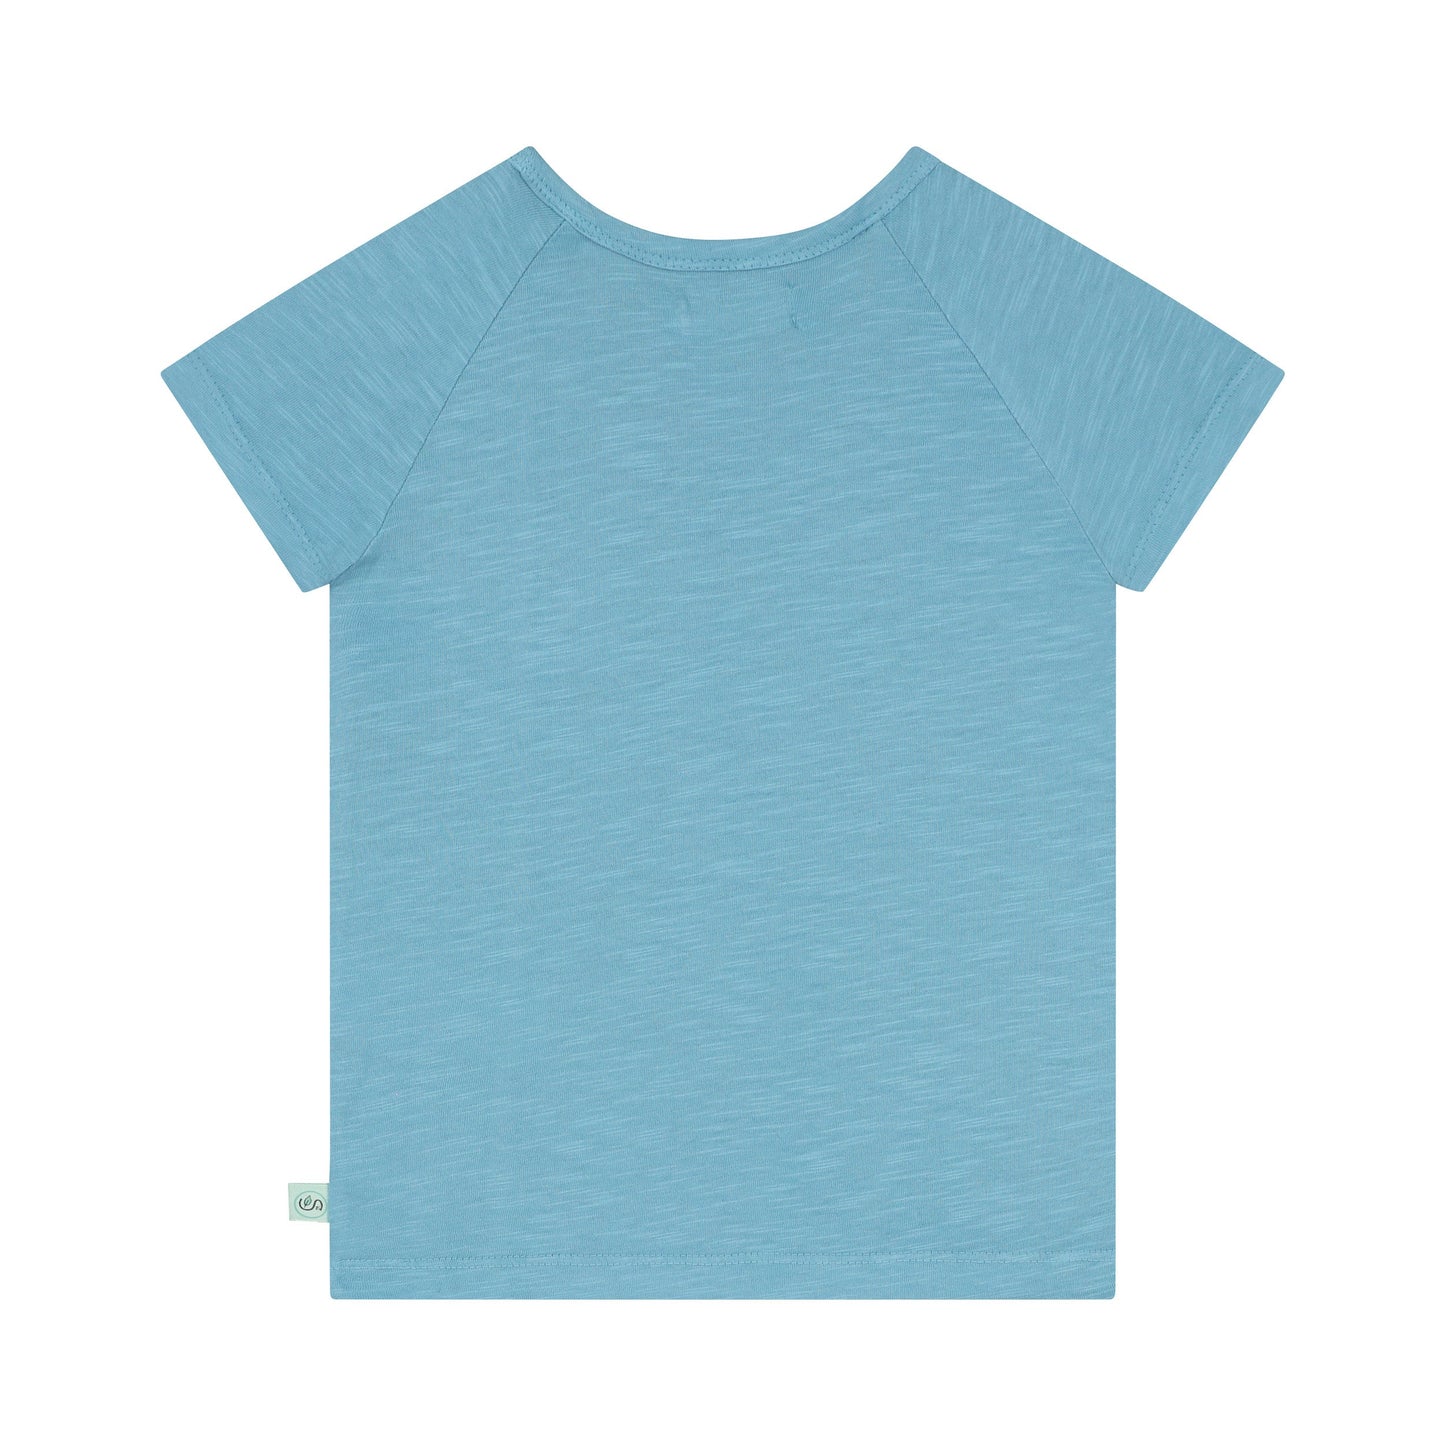 'Safari Hawk Guide' Blauw T-shirt met korte mouwen